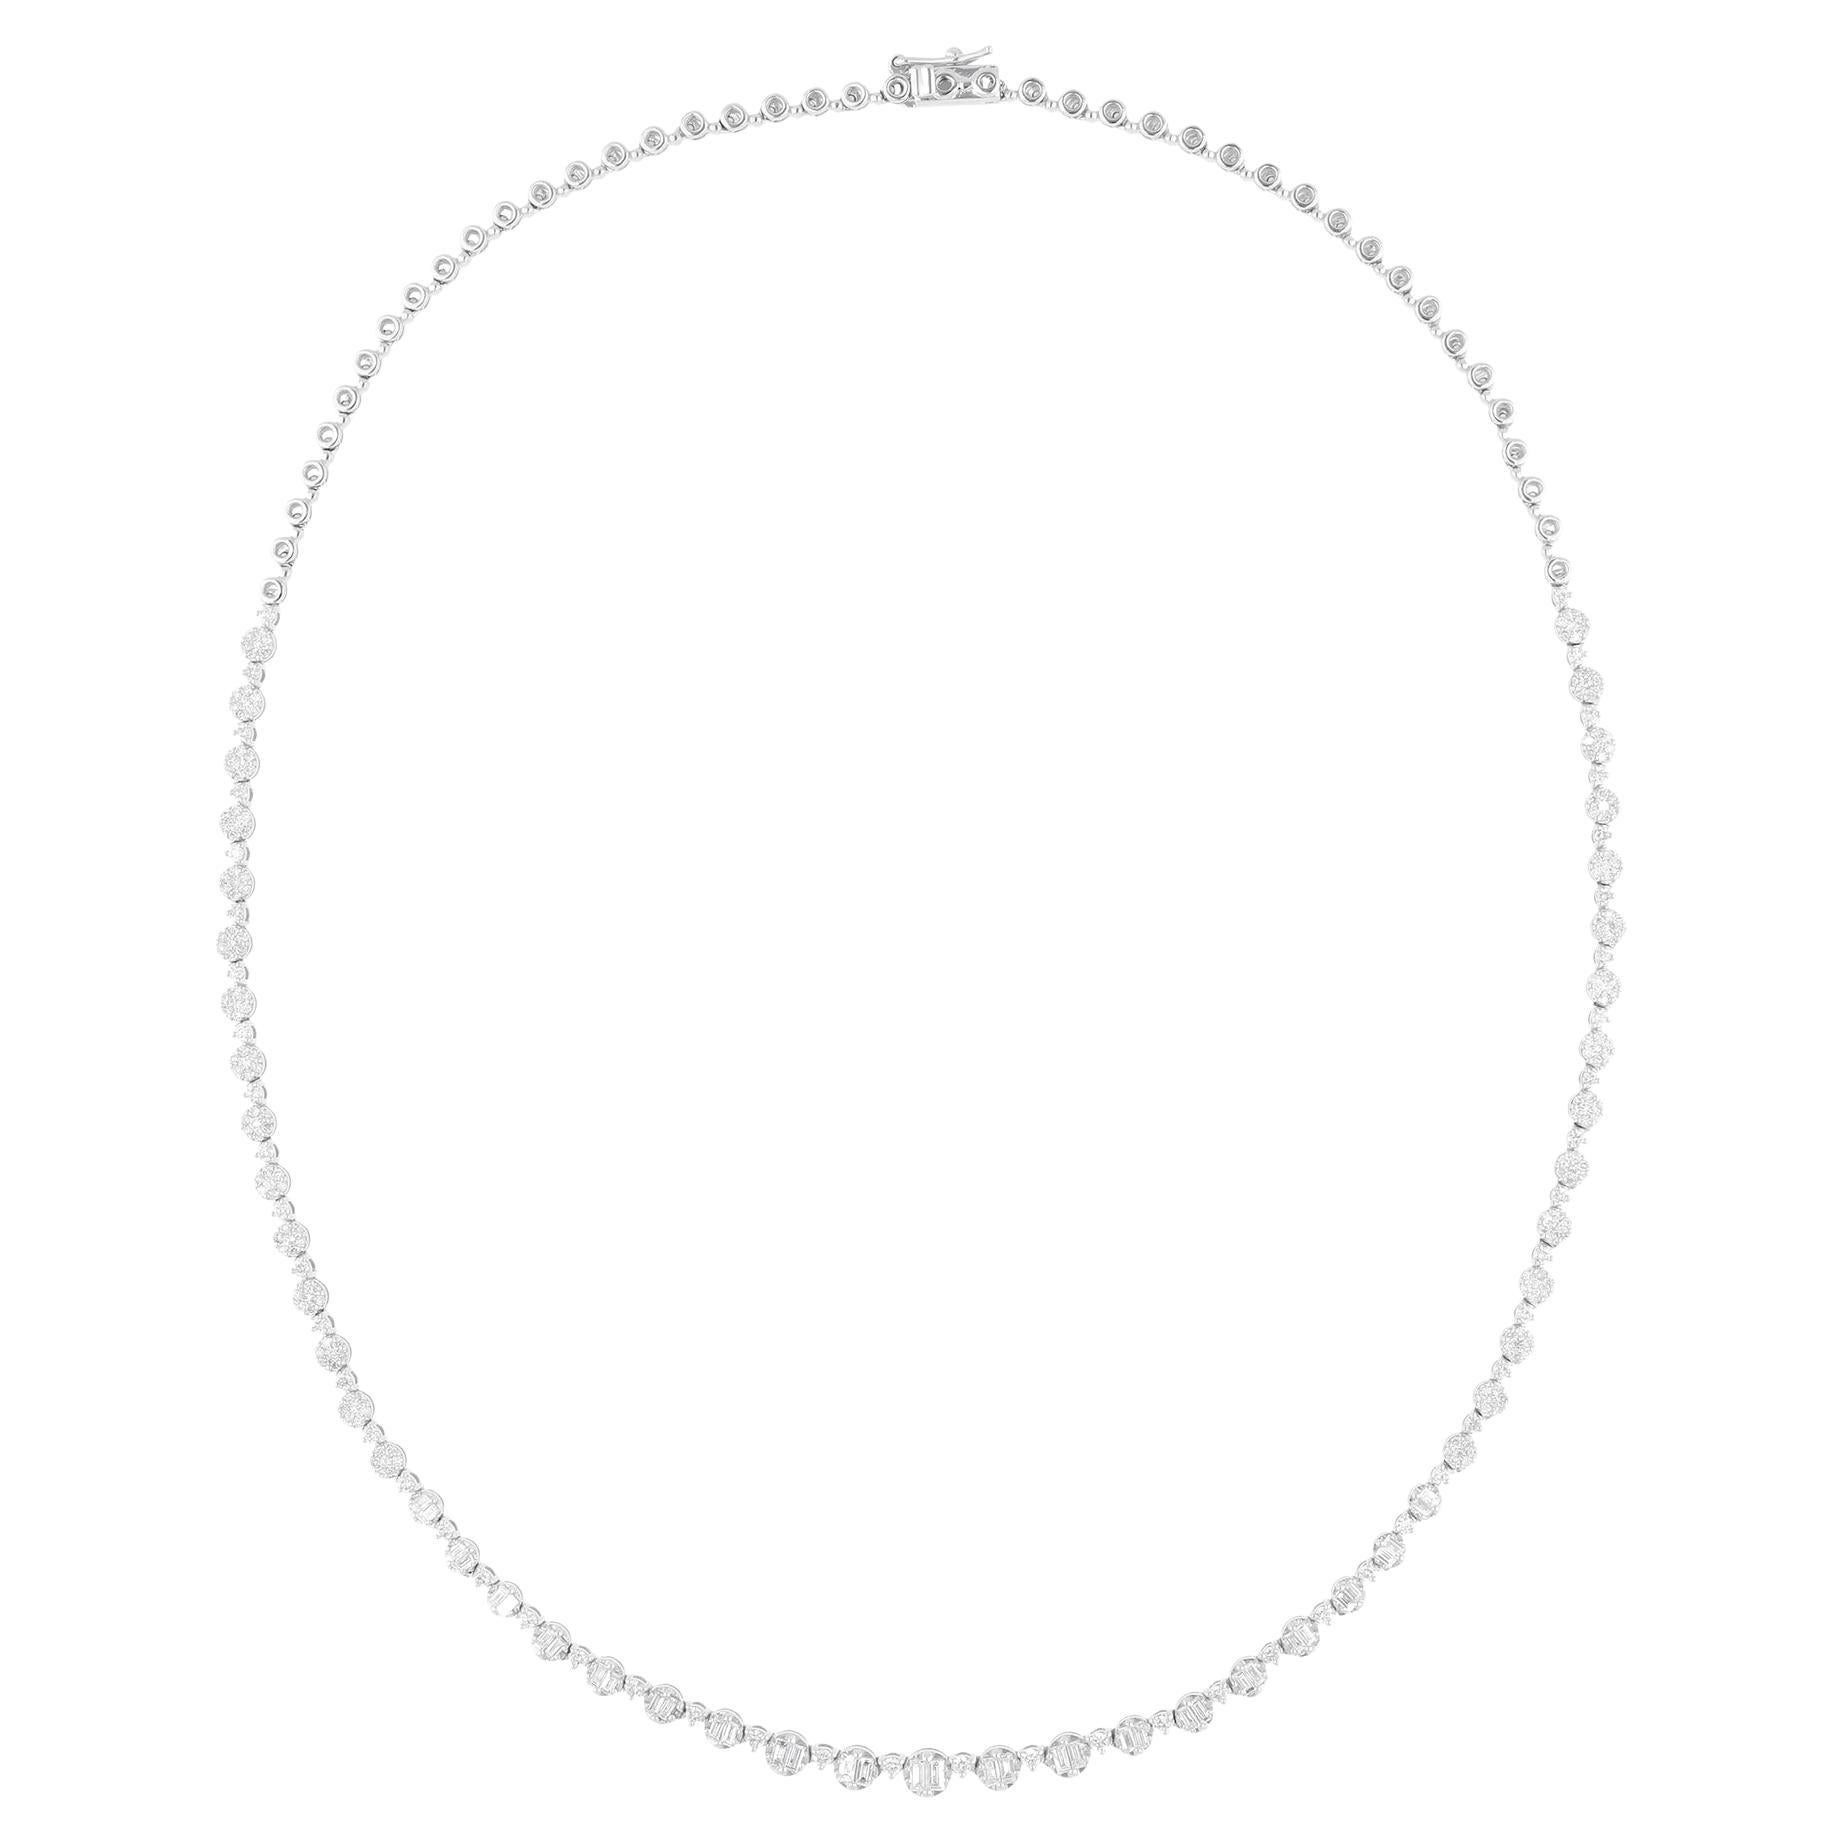 2.35 Carat SI Clarity HI Color Diamond Necklace 18 Karat White Gold Fine Jewelry